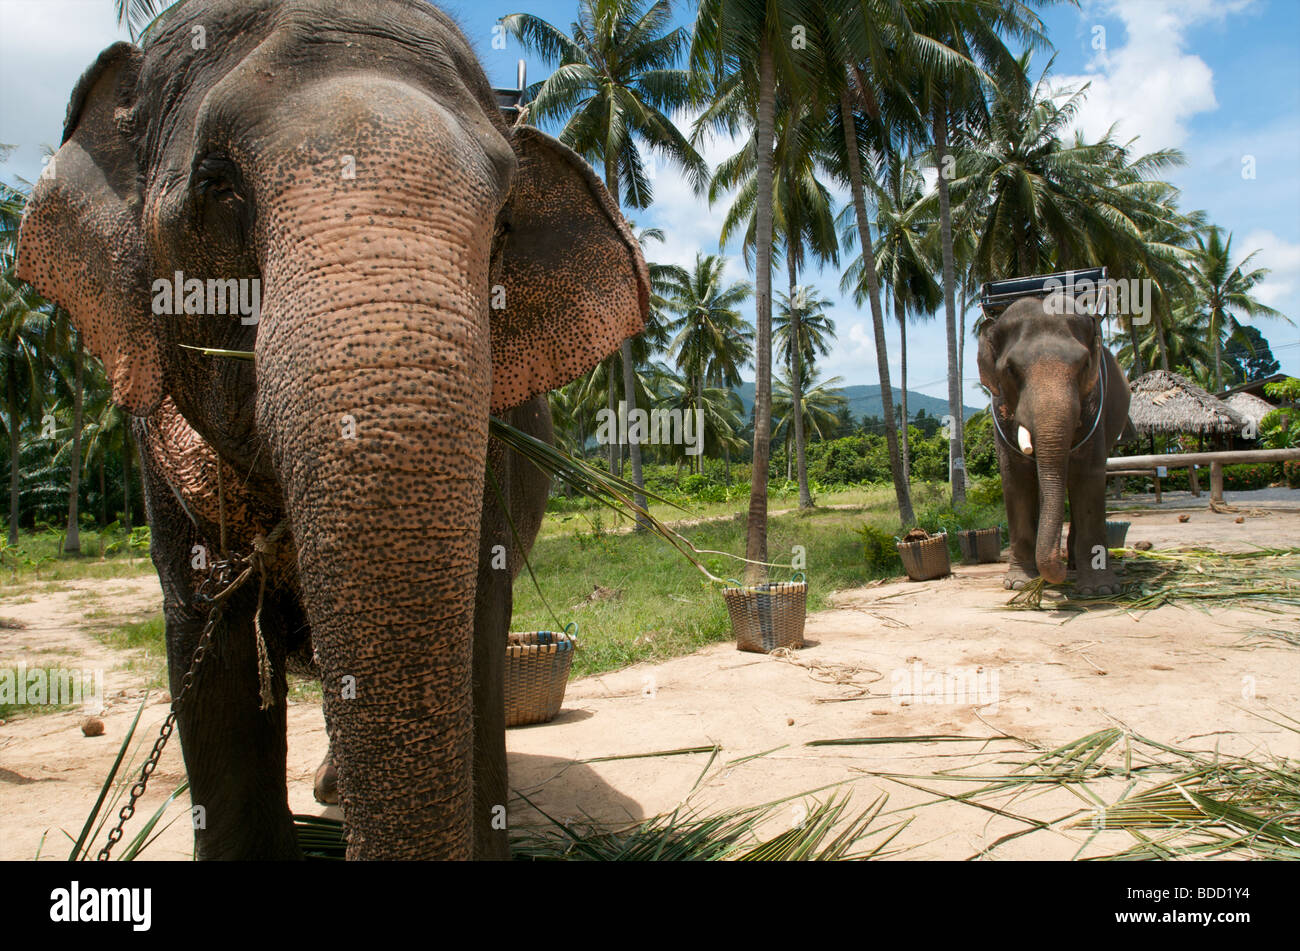 Dos elefantes que se alimentan de hojas de palma en la isla de Koh Samui Tailandia Foto de stock